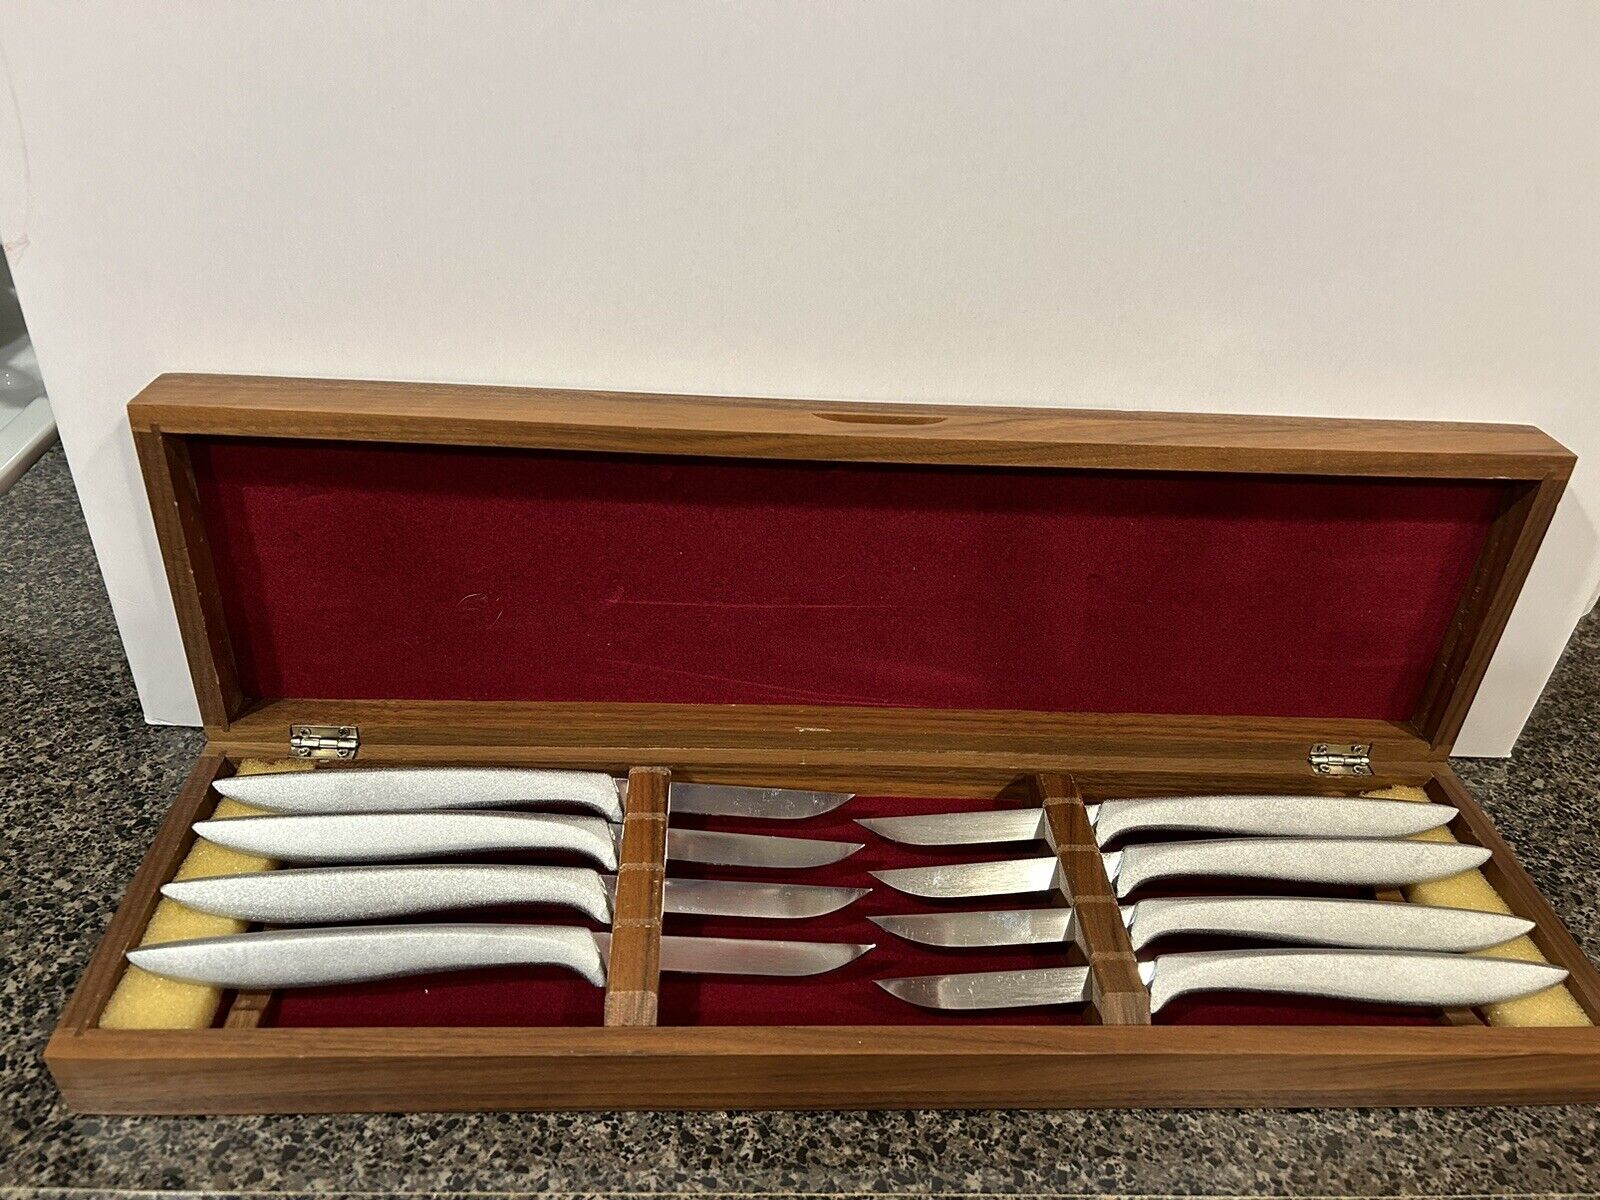 Gerber Legendary Blades set of 8 steak knives in walnut box